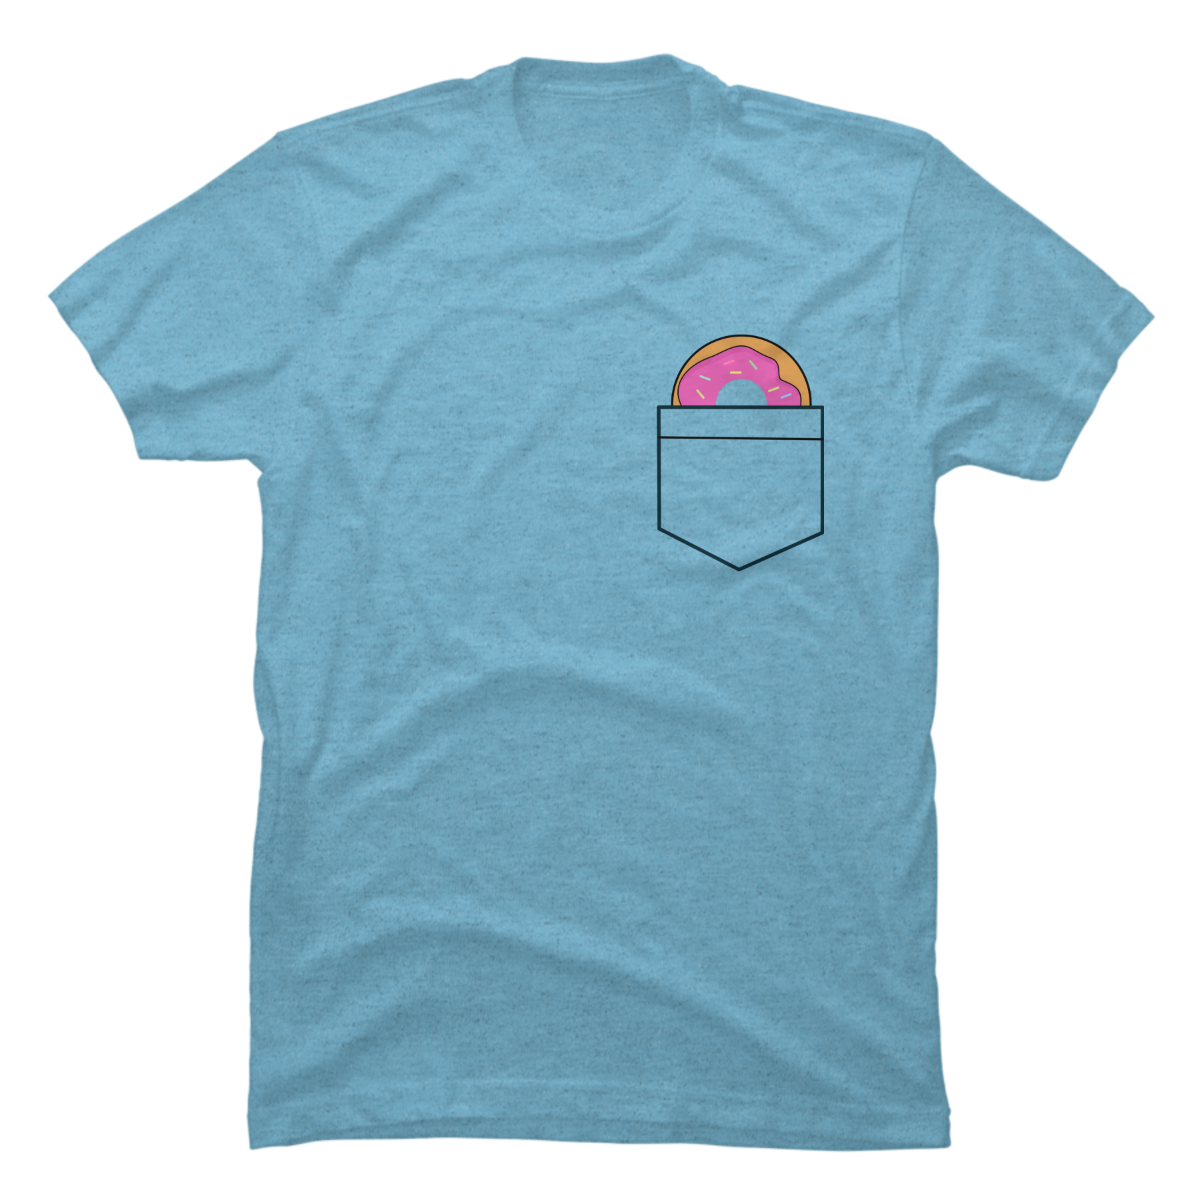 donut t-shirt design